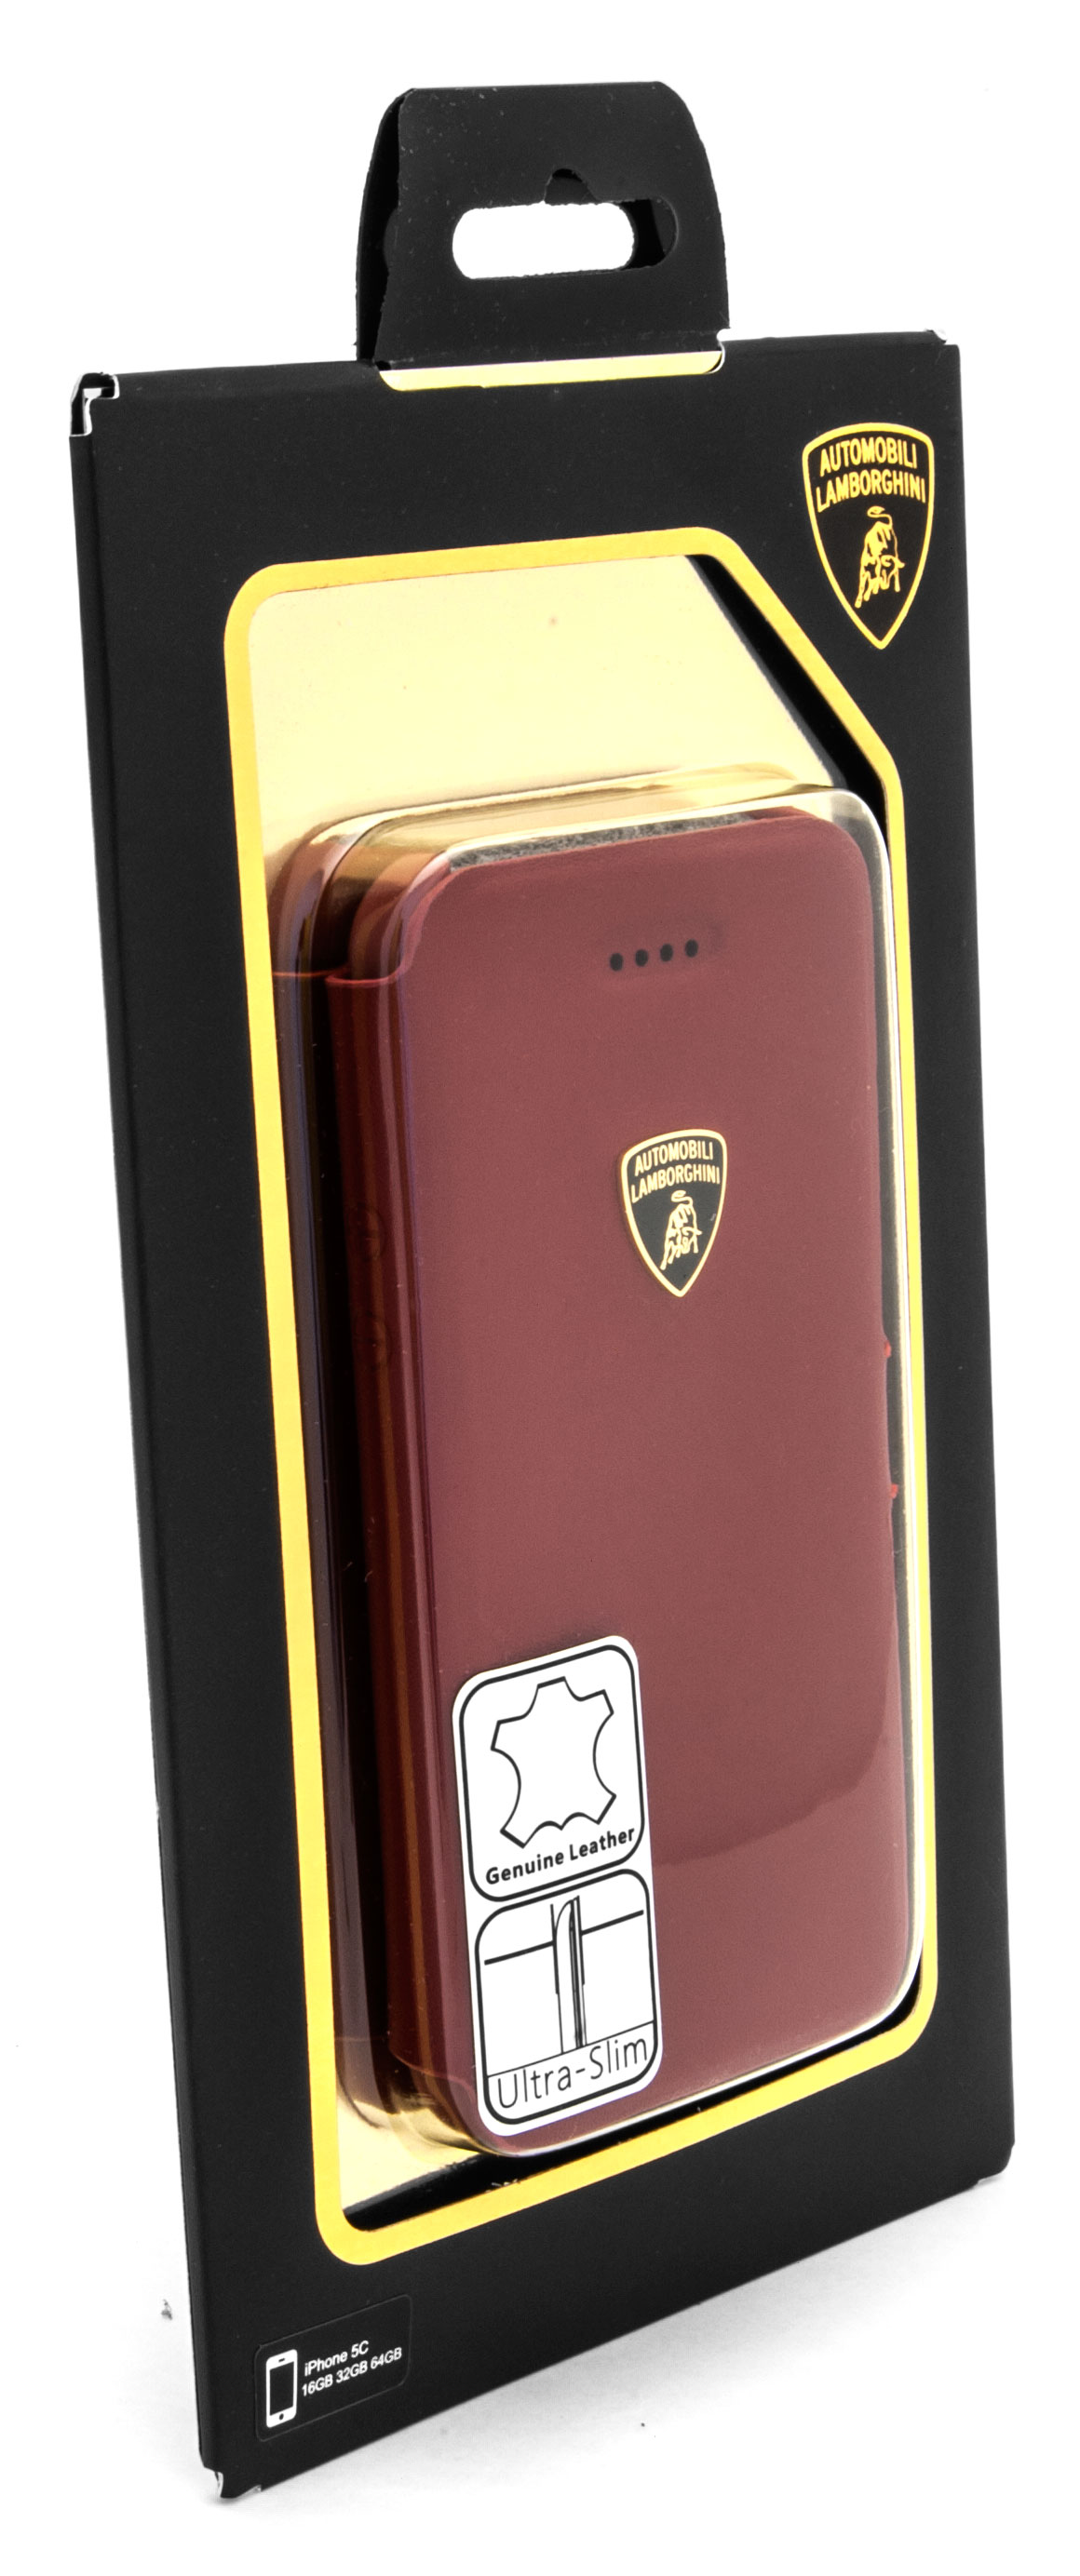 Кожаная кейс-книжка Lamborghini  Diablo для iPhone 5C (красная)